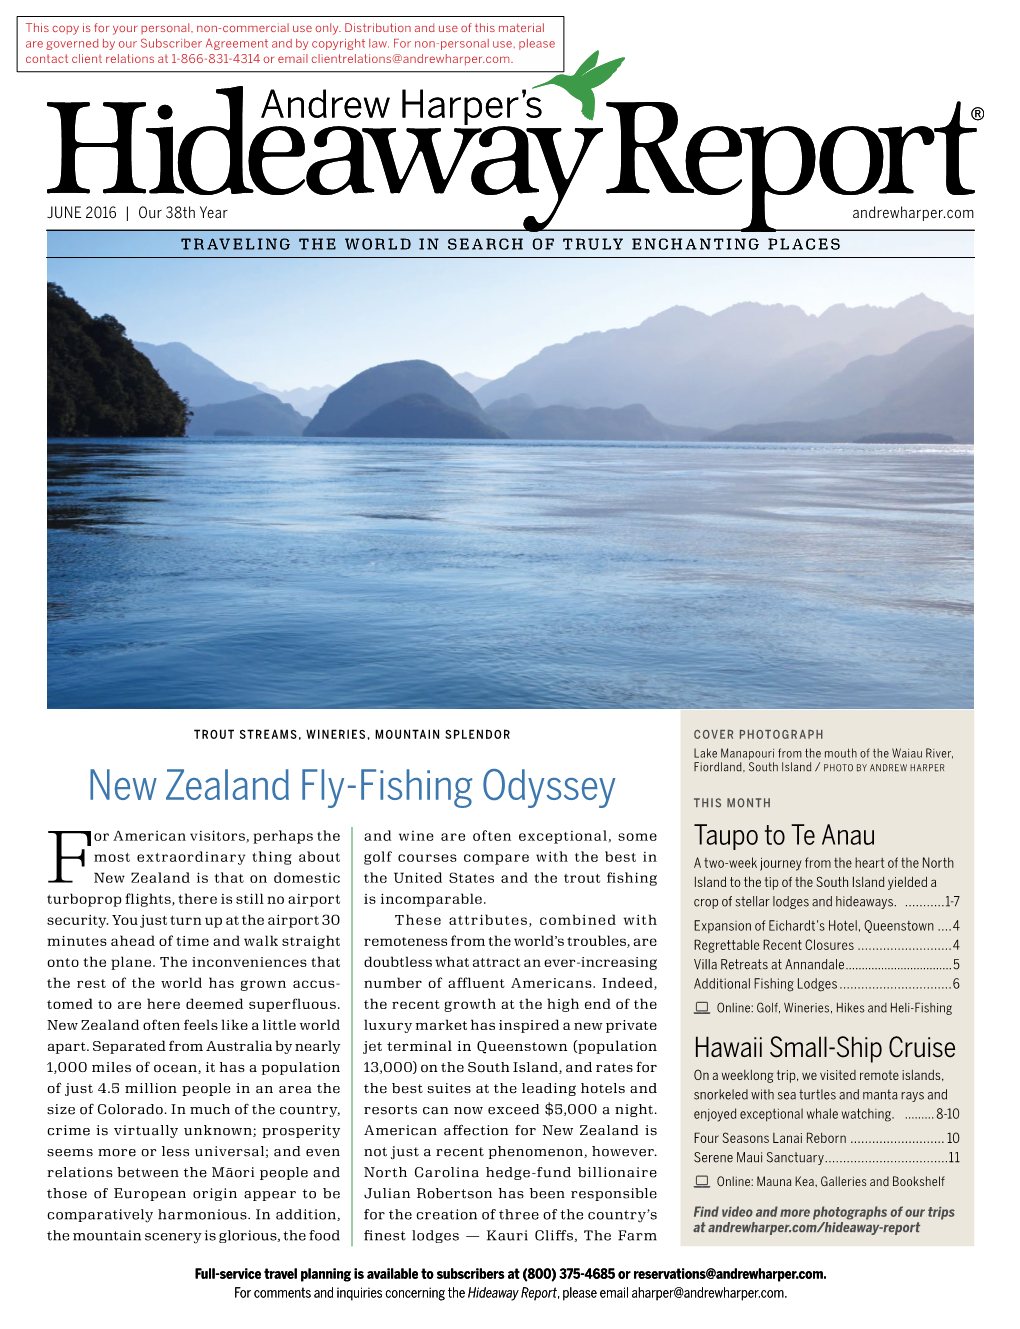 New Zealand Fly-Fishing Odyssey